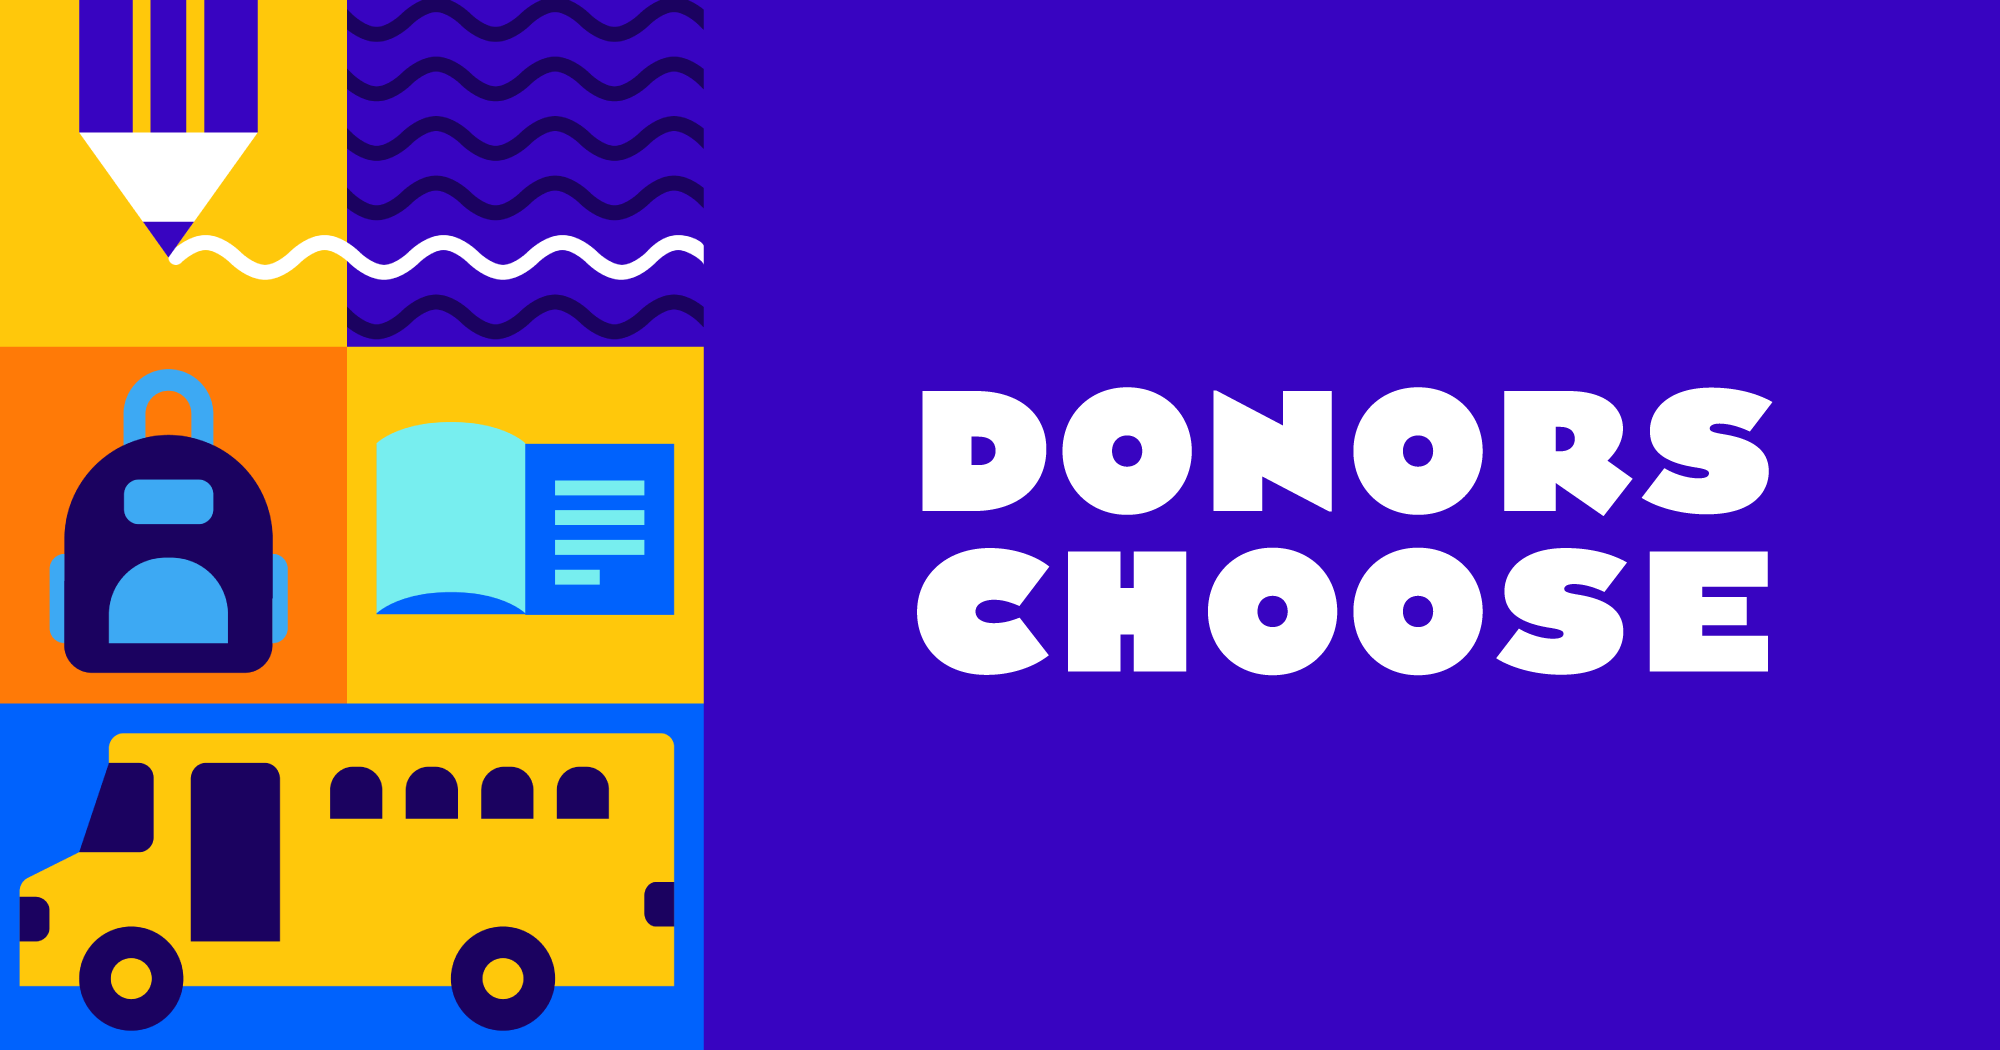 www.donorschoose.org